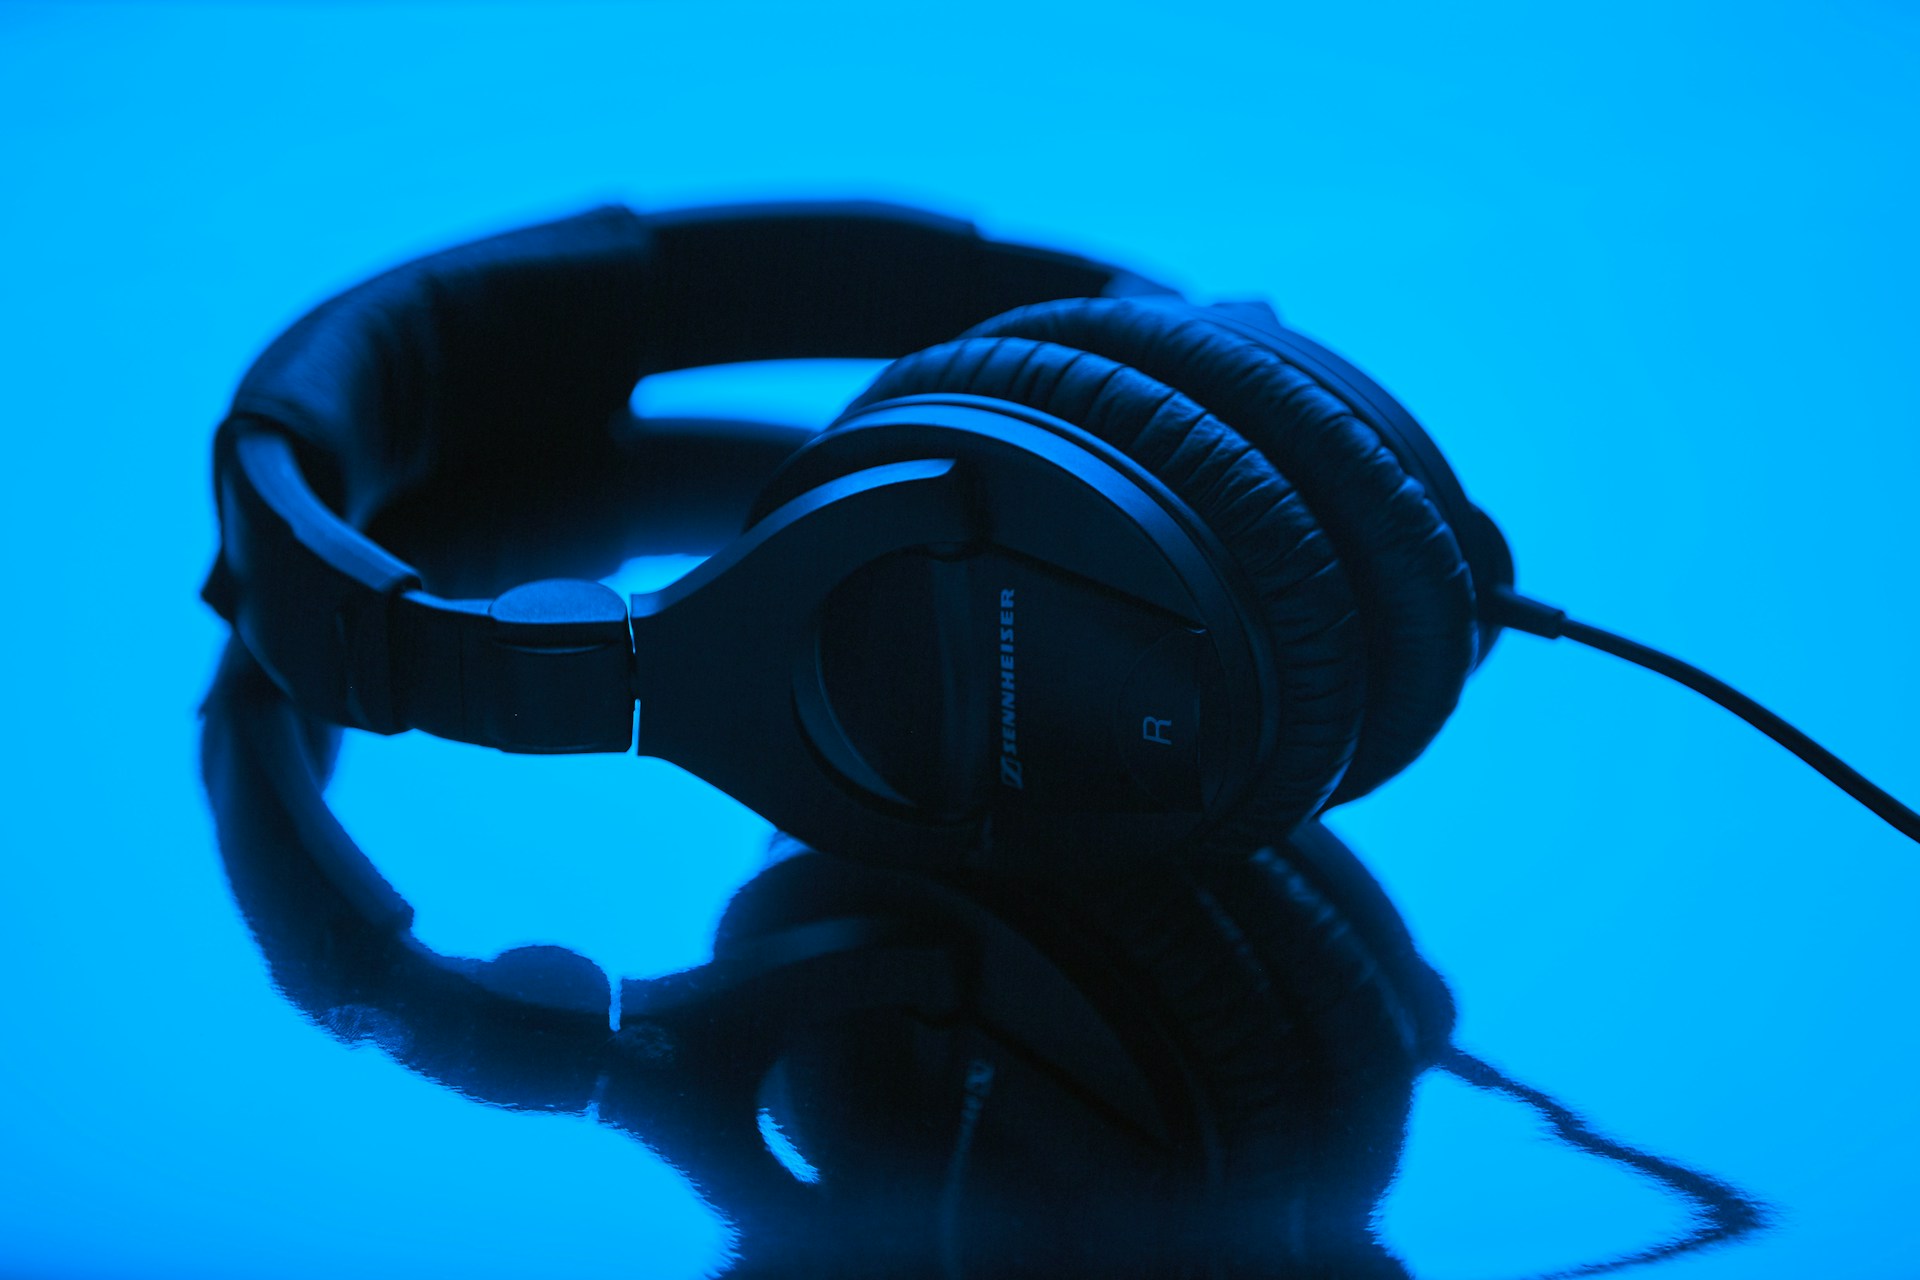 description: a set of black over-the-ear Sennheiser headphones on a blue background. Photo by Patrick Fore on Unsplash